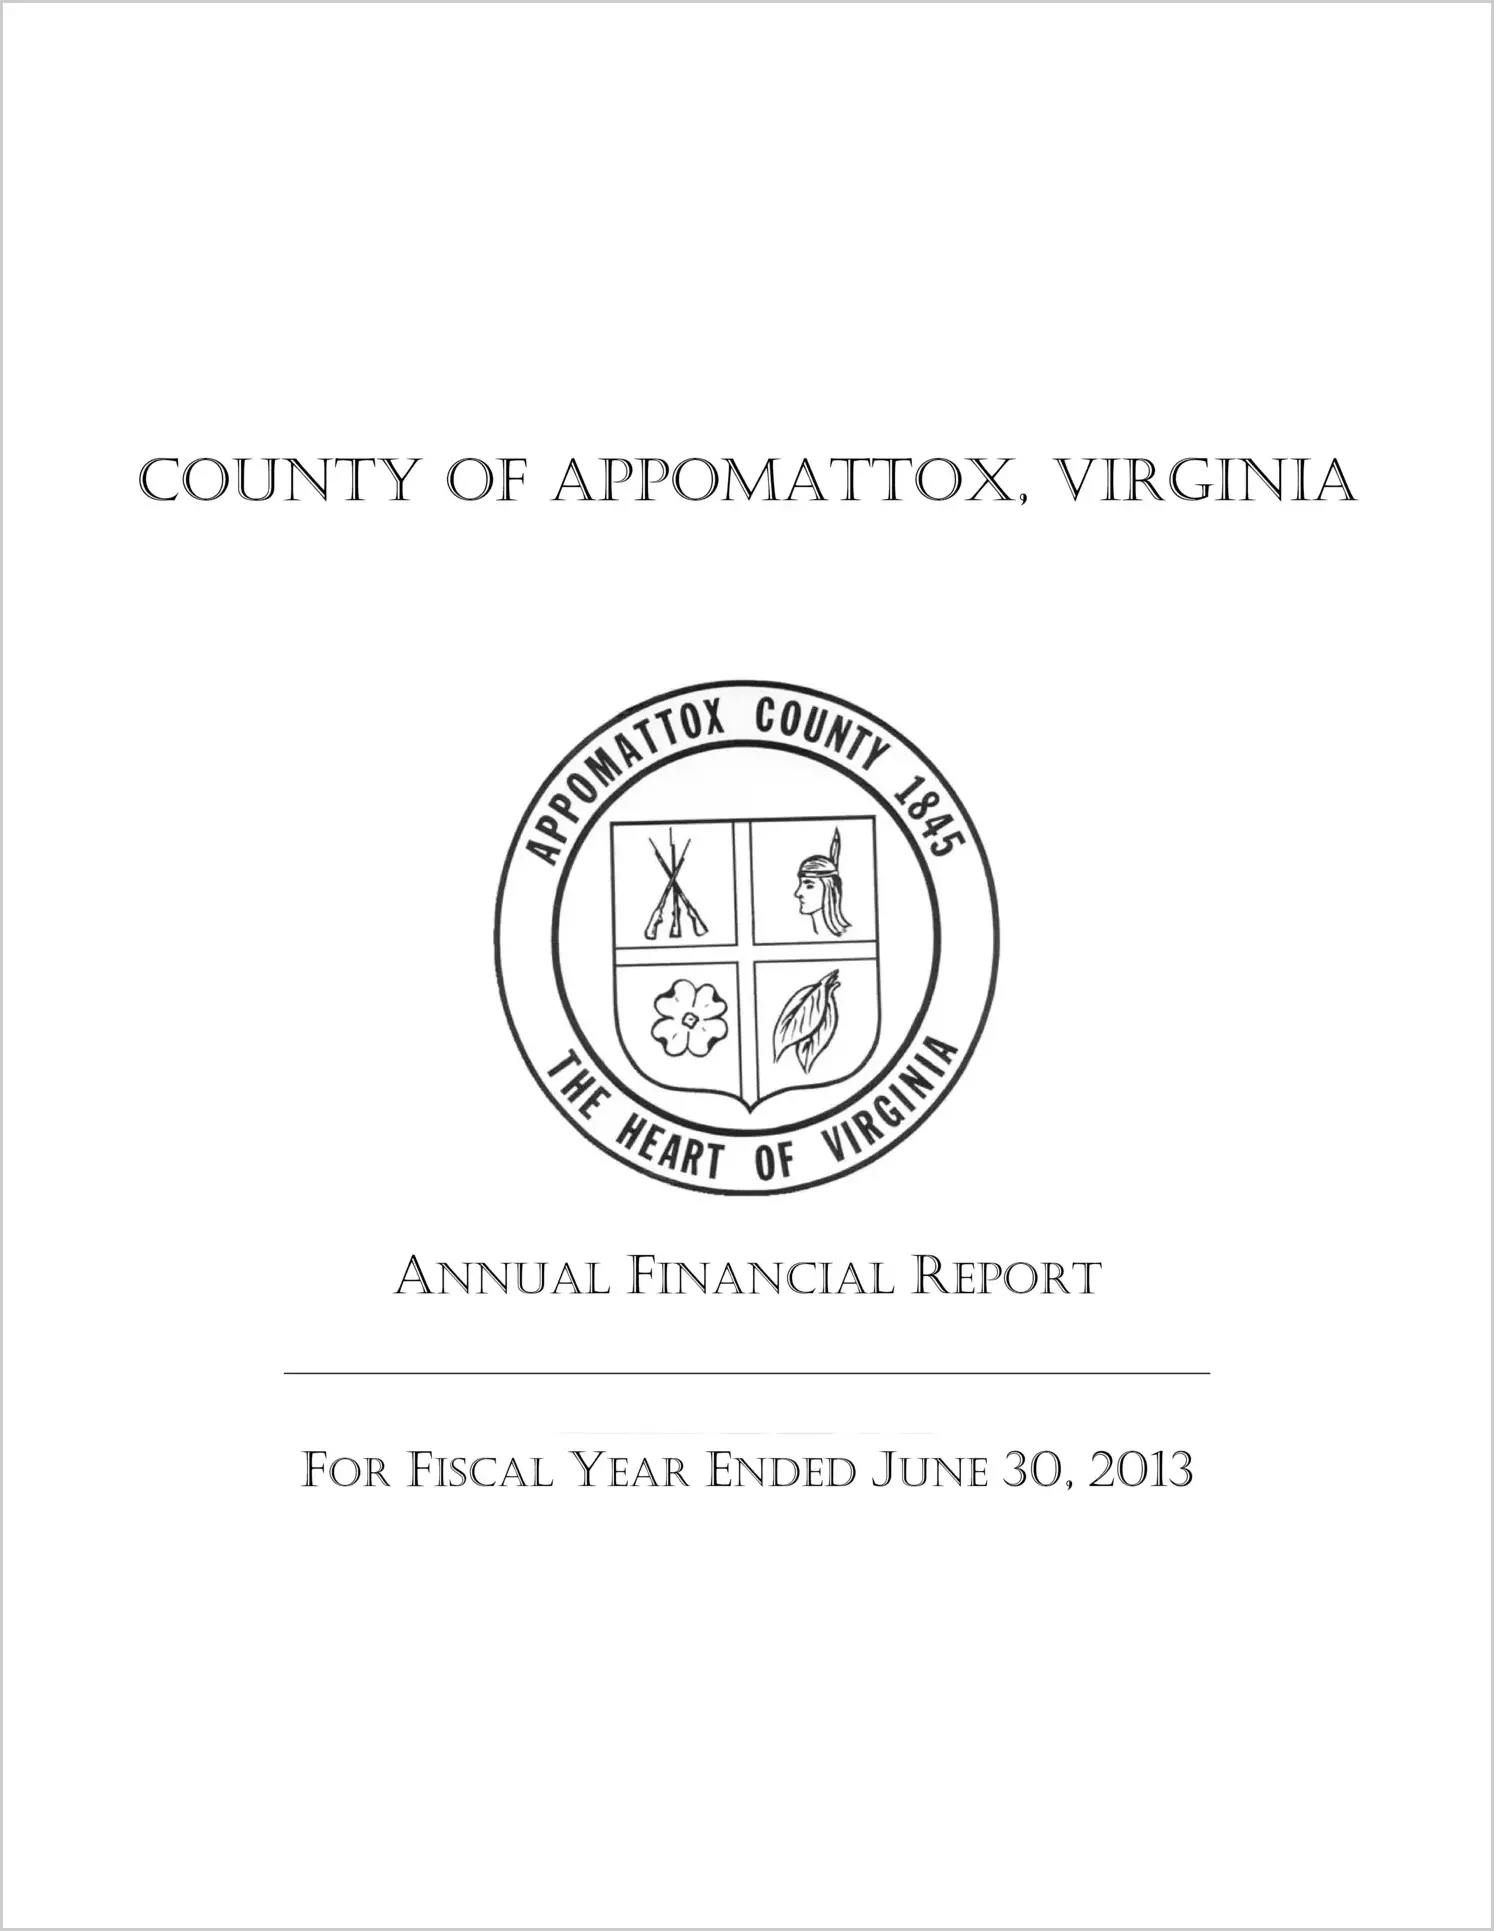 2013 Annual Financial Report for County of Appomattox